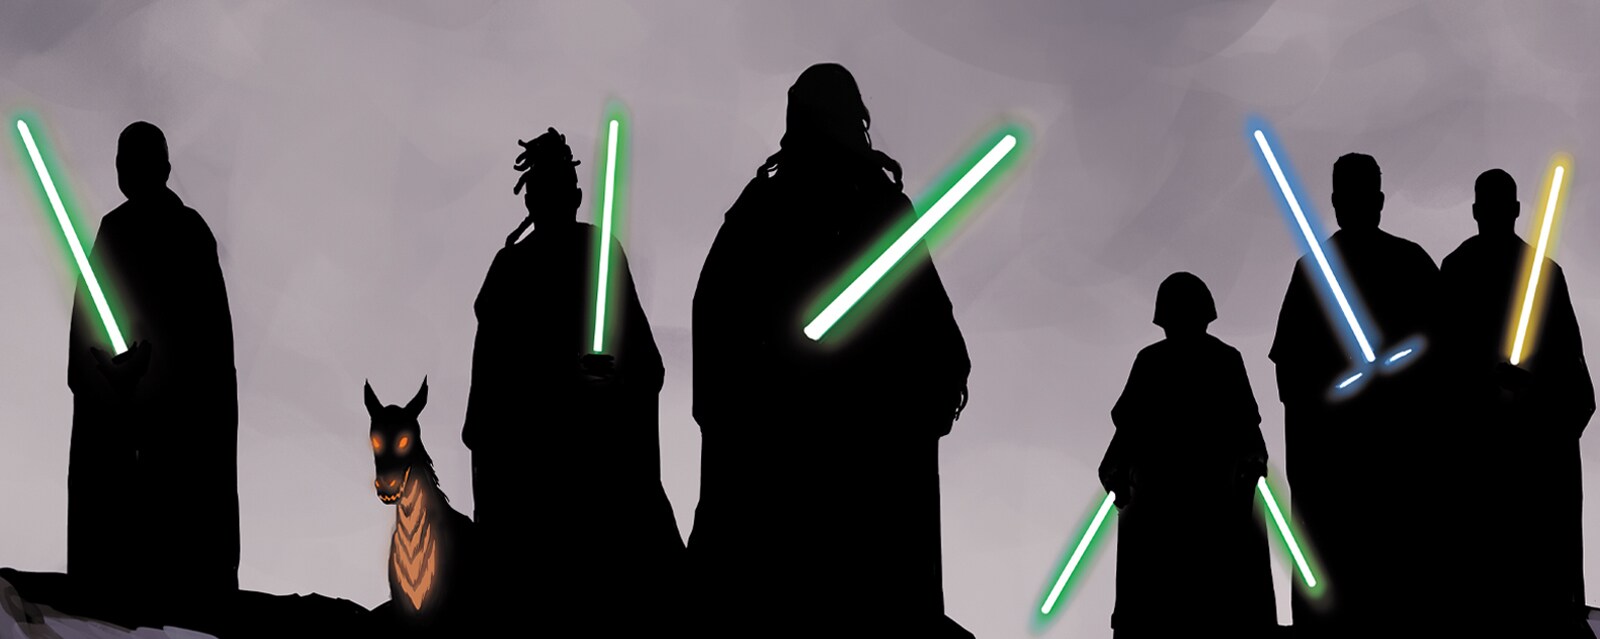 Star Wars: The High Republic Phase III key art 